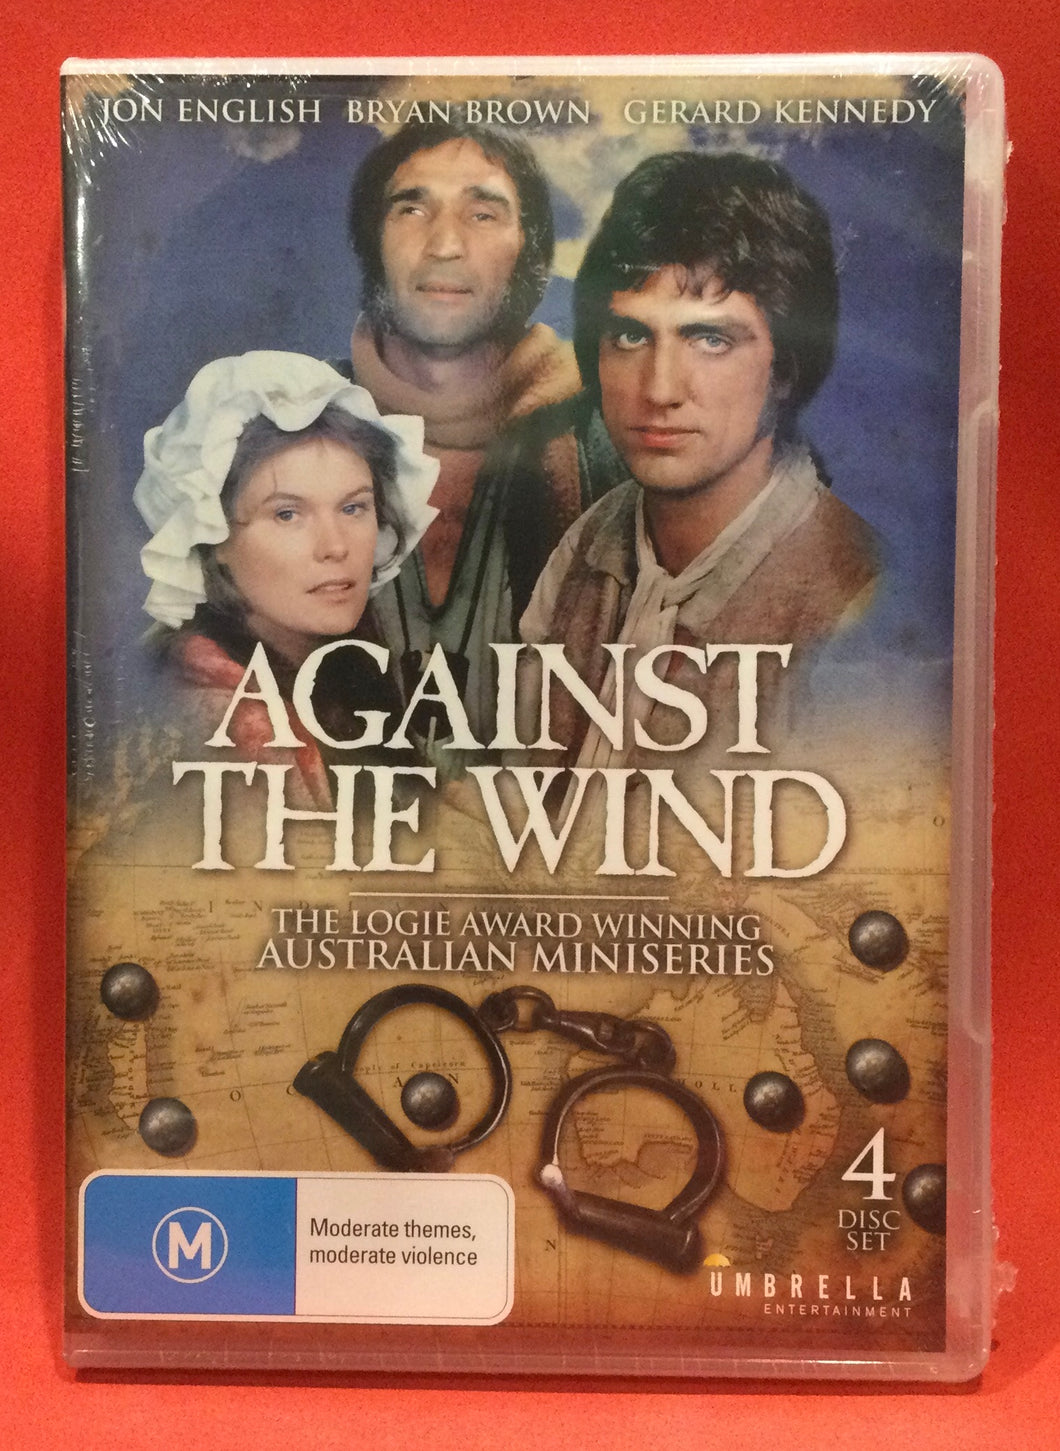 AGAINST THE WIND JON ENGLISH DVD